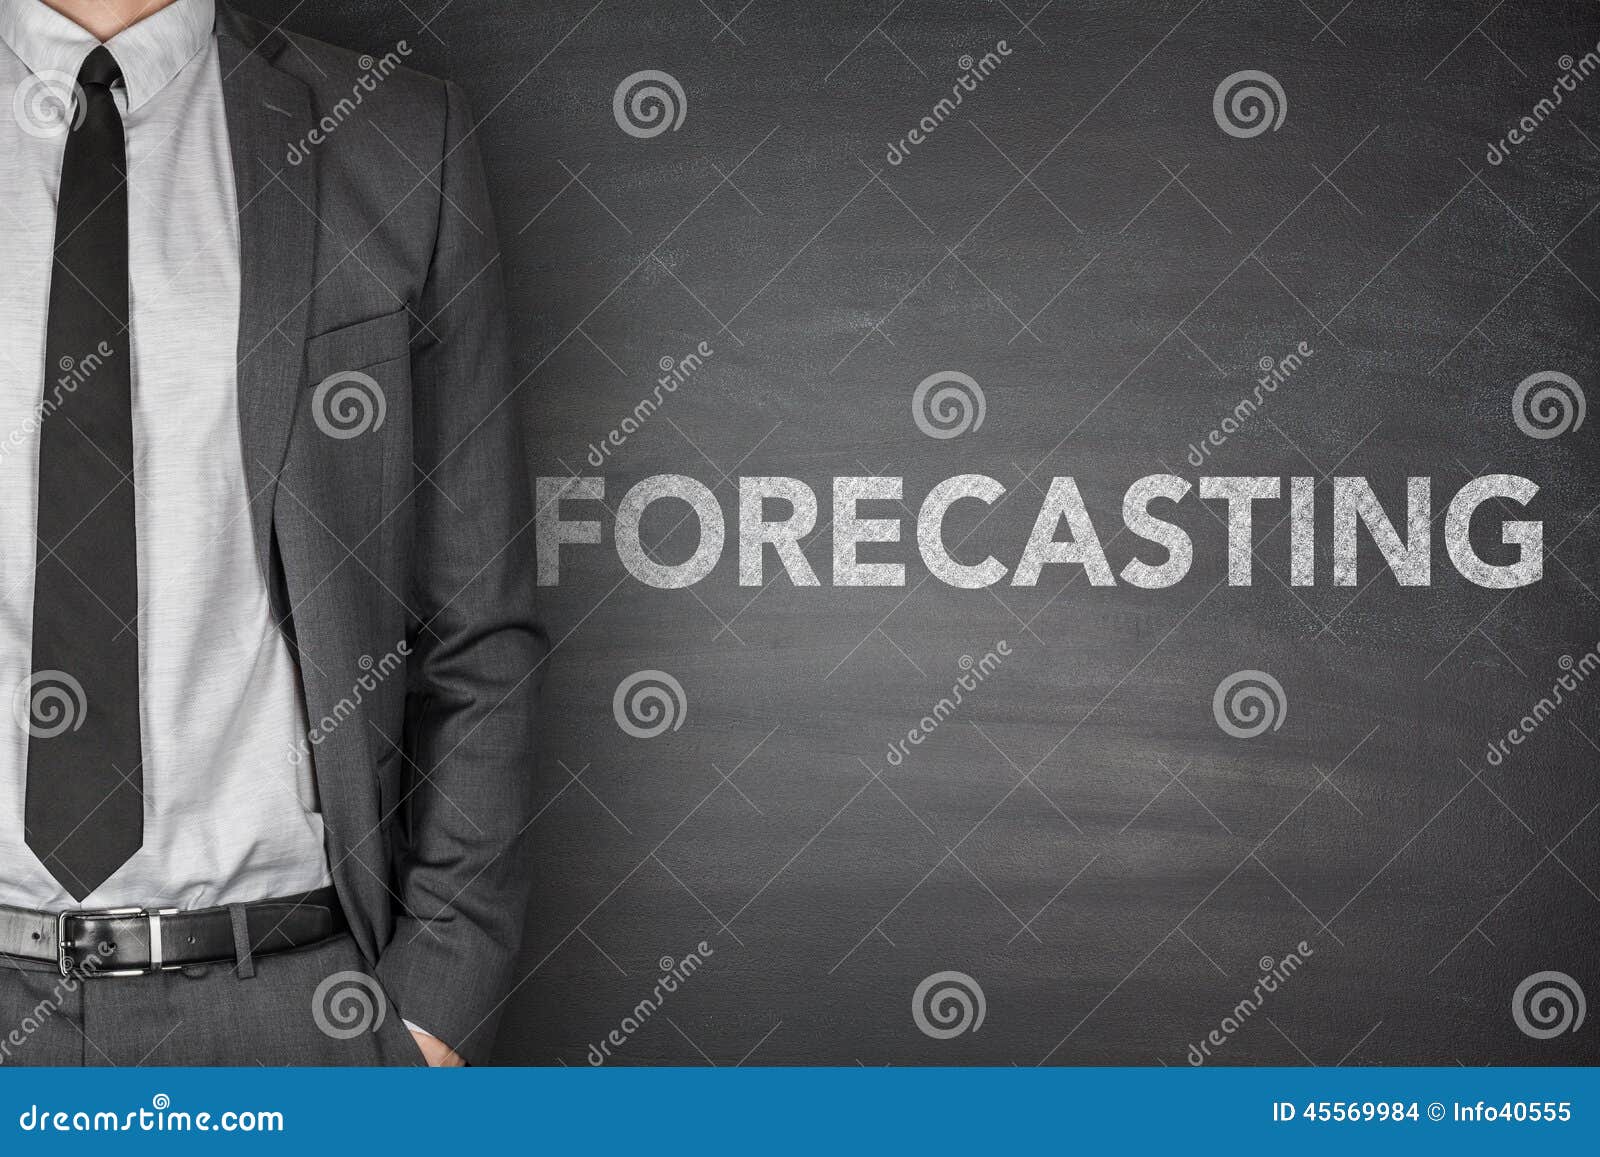 forecasting on blackboard